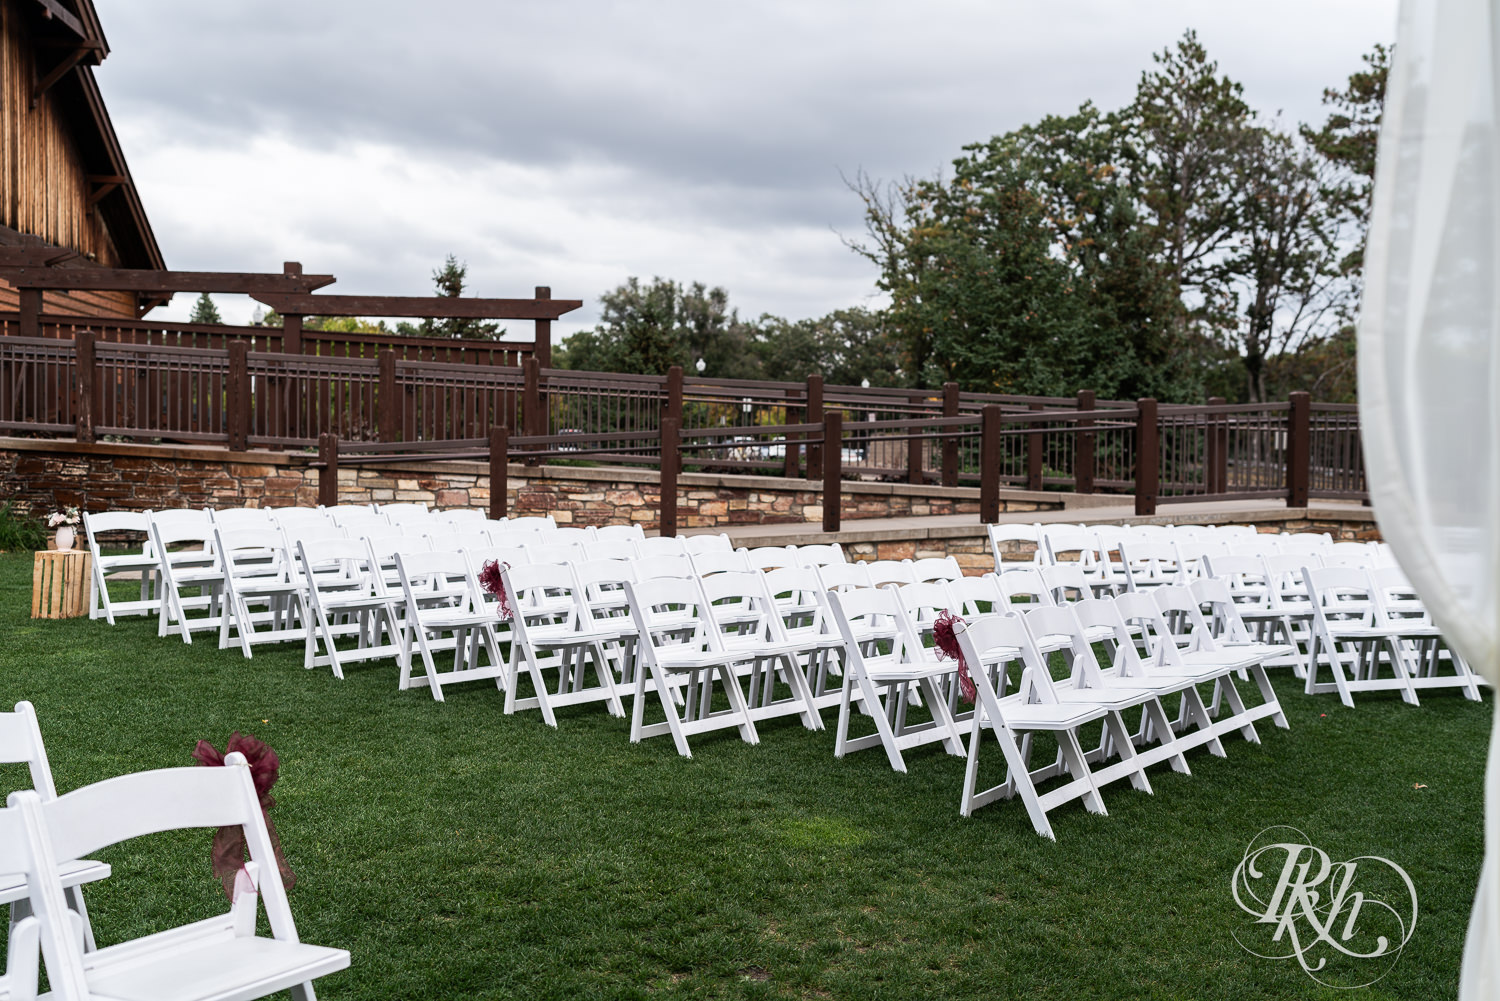 Outdoor wedding ceremony setup at Bunker Hills Event Center in Coon Rapids, Minnesota. 